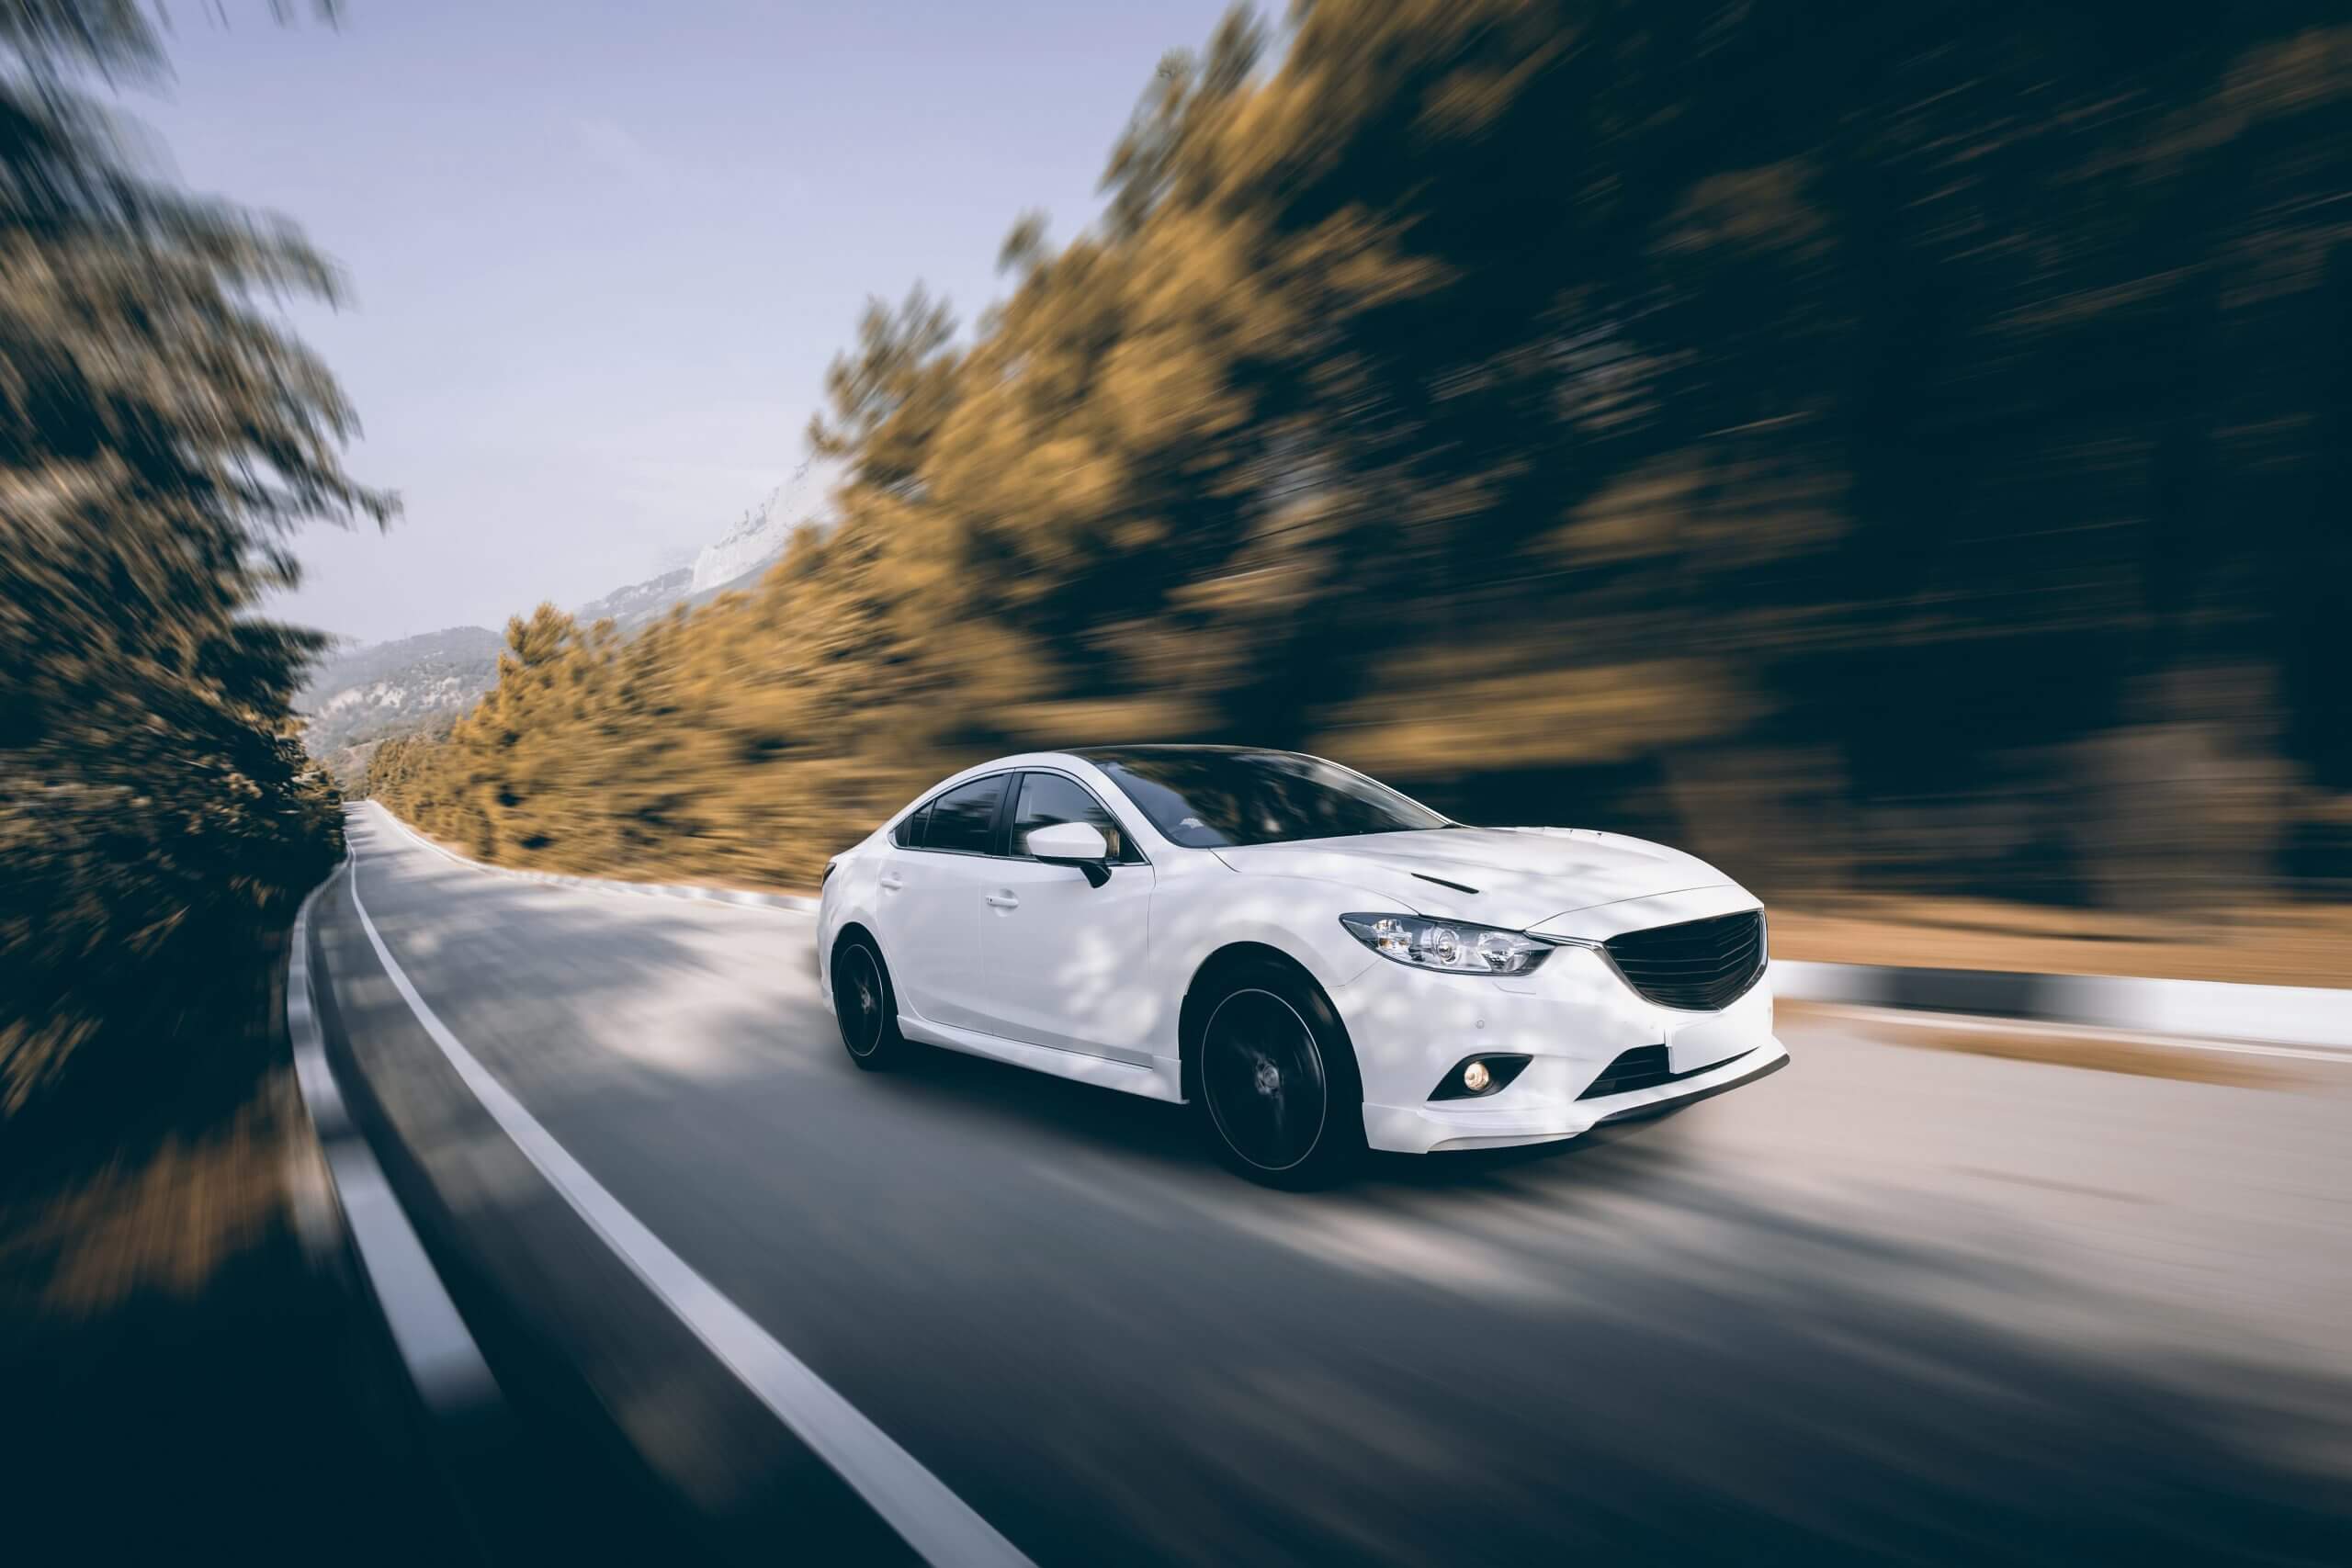 White car speed driving on asphalt road at daytime